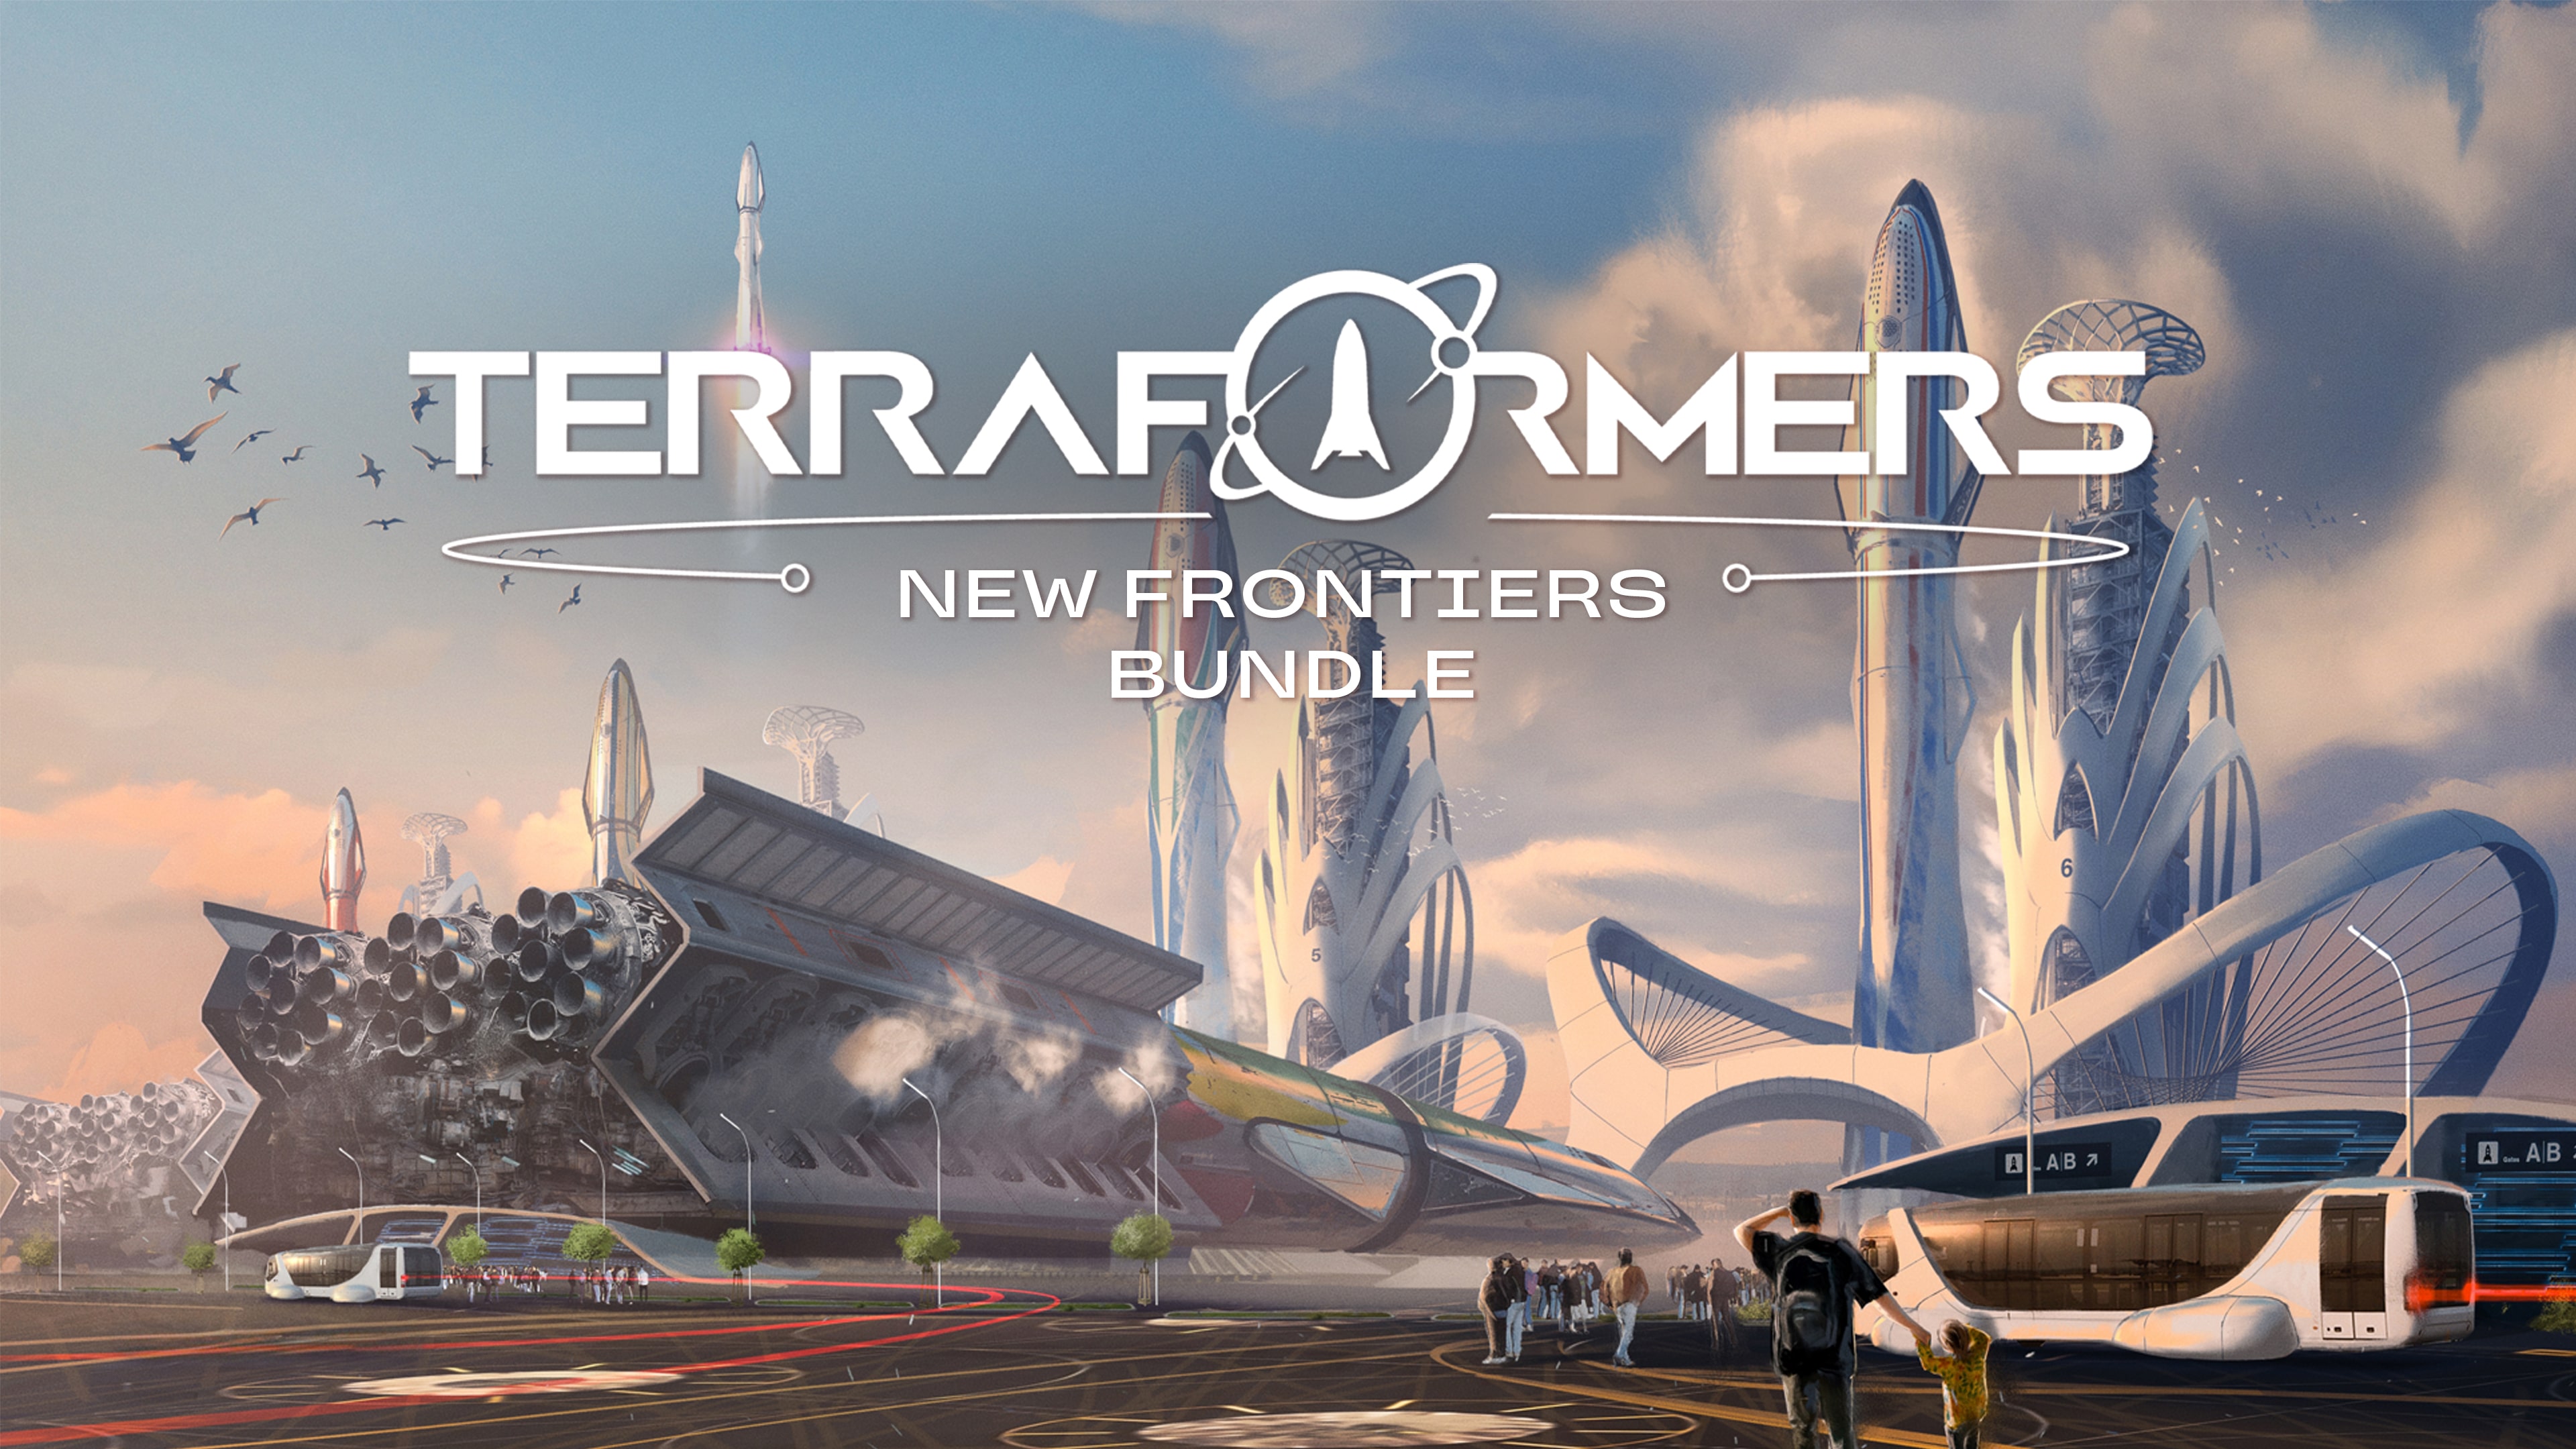 Terraformers: New Frontiers Bundle (중국어(간체자), 한국어, 영어, 일본어, 중국어(번체자))